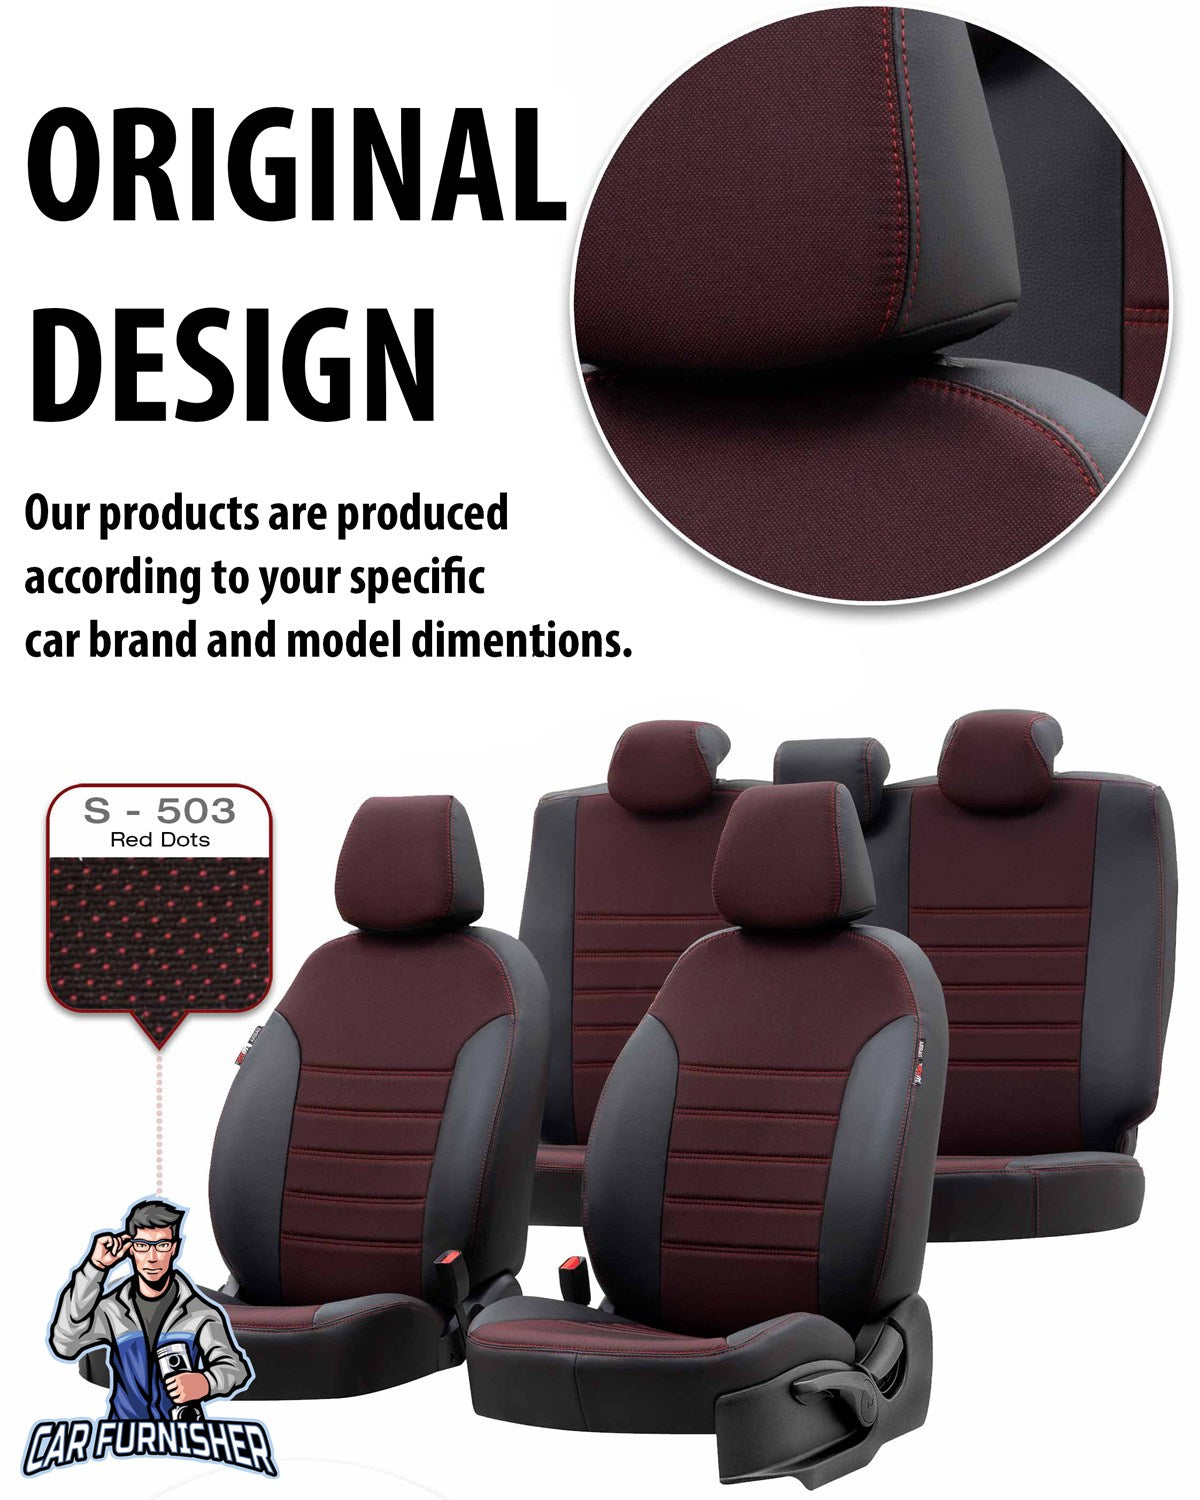 Toyota Rav4 Seat Cover Paris Leather & Jacquard Design Dark Beige Leather & Jacquard Fabric